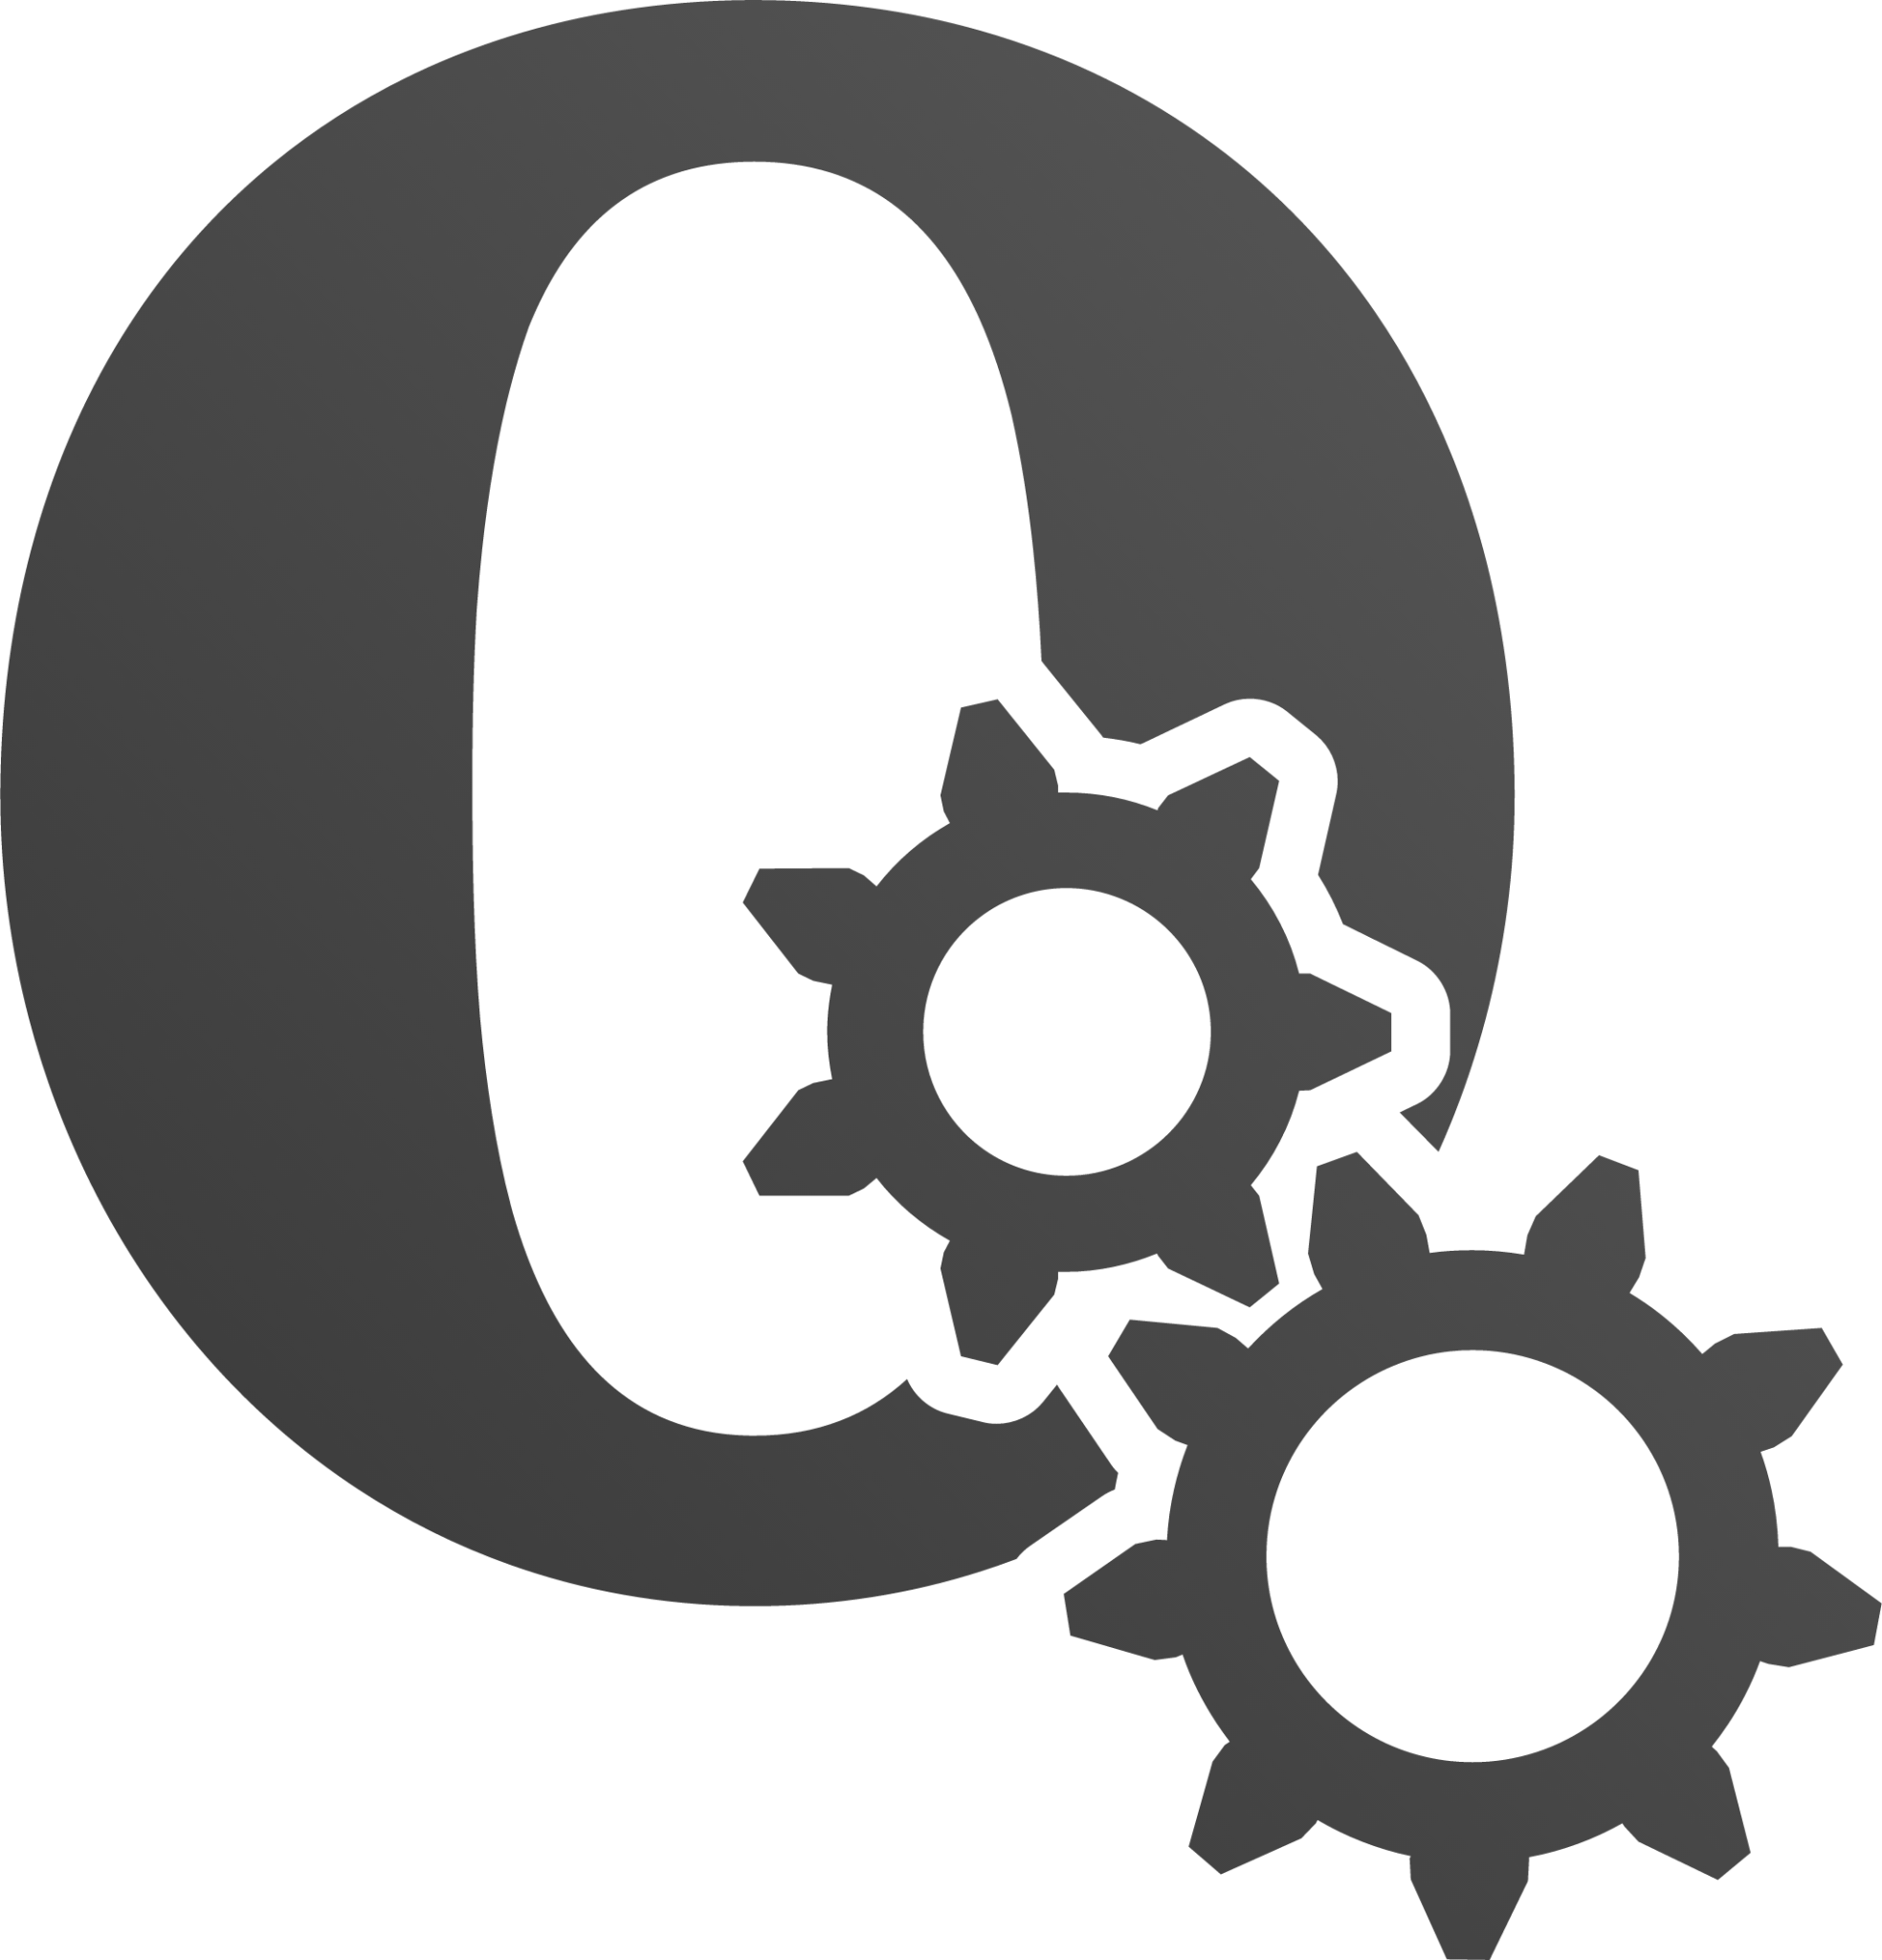 opera widget manager icon